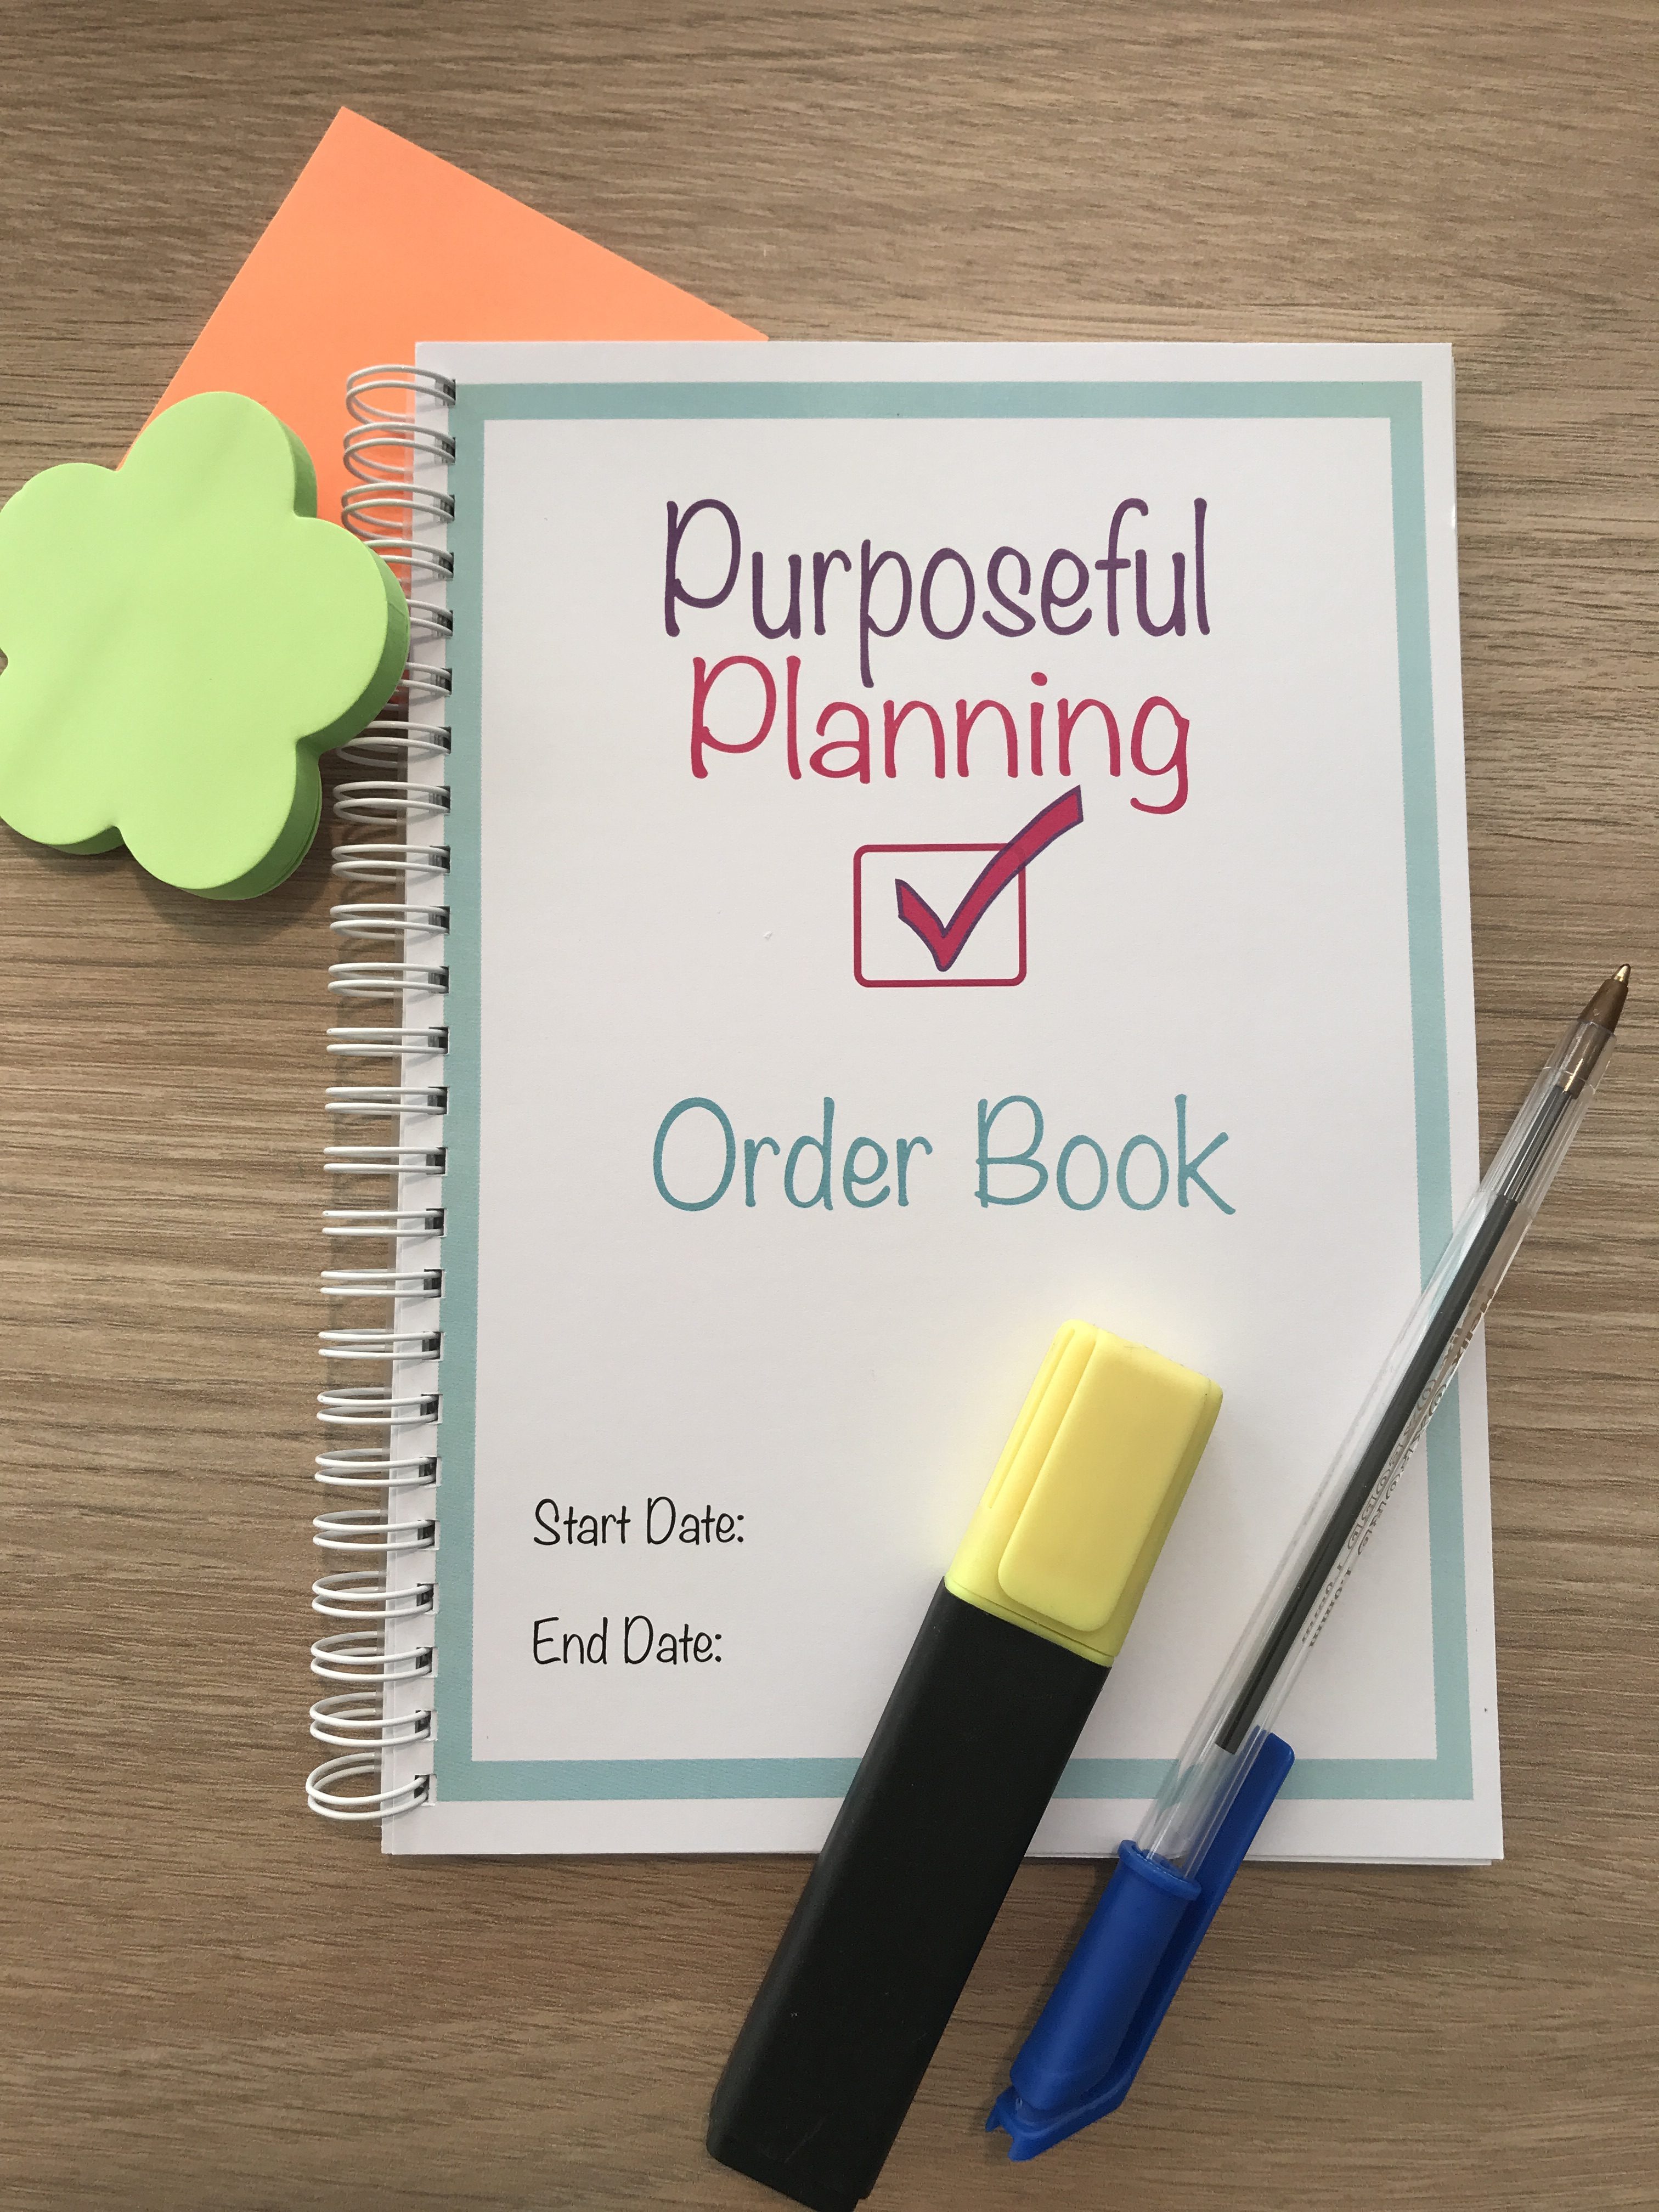 Order custom business plan